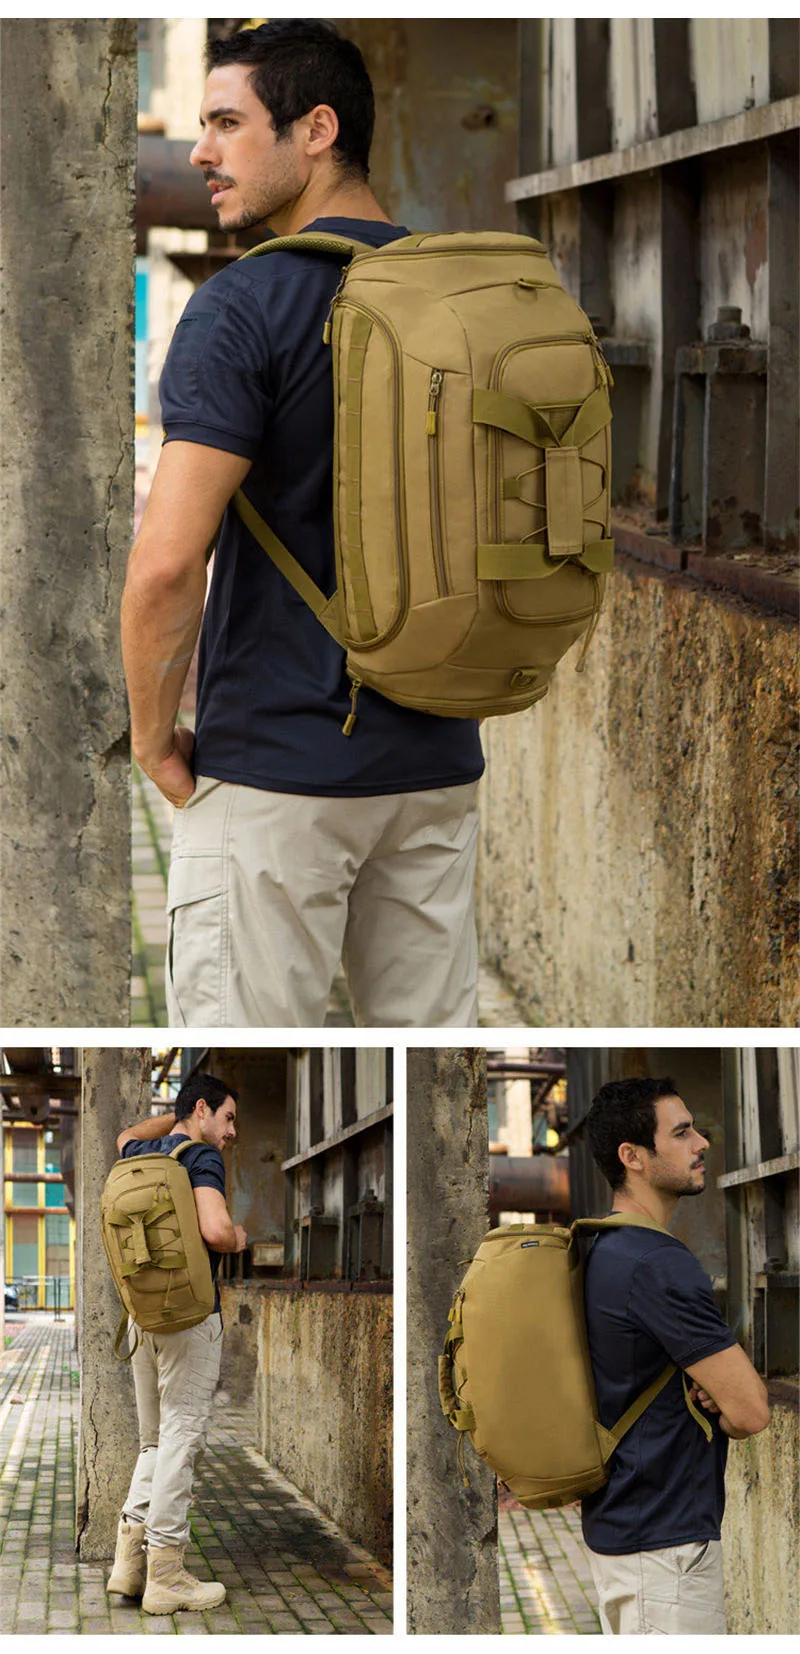 35L Military Backpack Rucksack Tactics Molle Army Bags Nylon Waterproof 14 Inch laptop Package Camera Bag Men Travel Bag